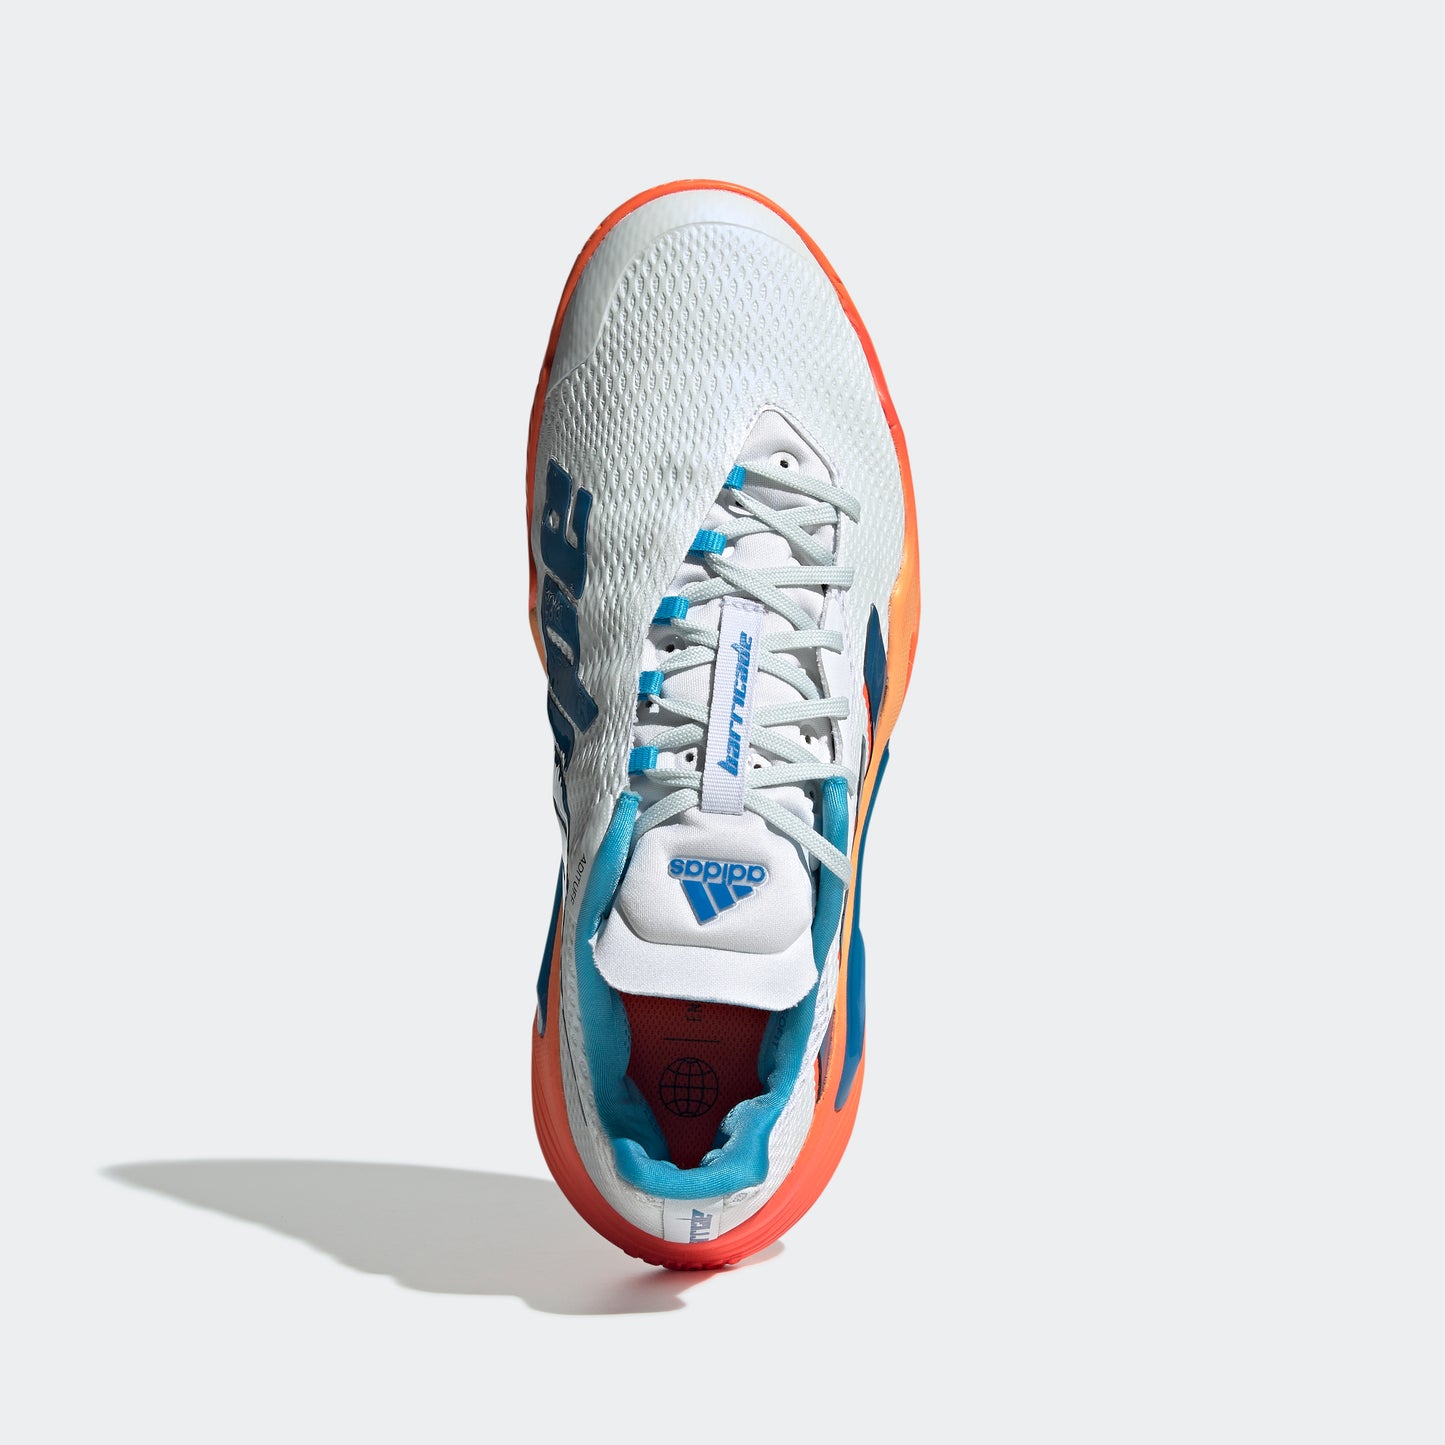 adidas Barricade Tennis Shoes | White/Blue/Orange | Men's